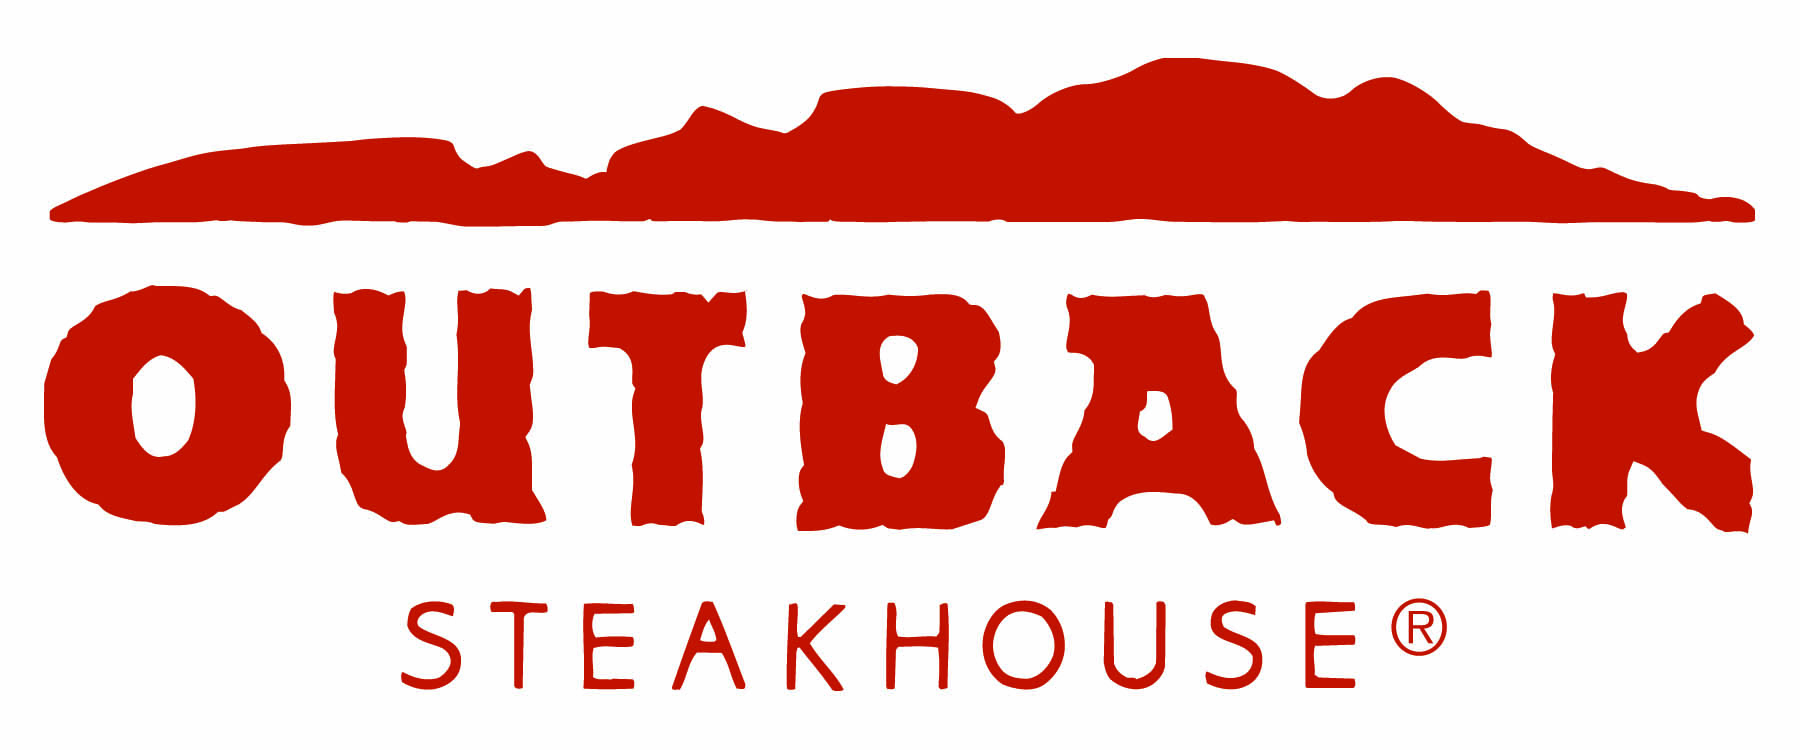 Outback Steak House